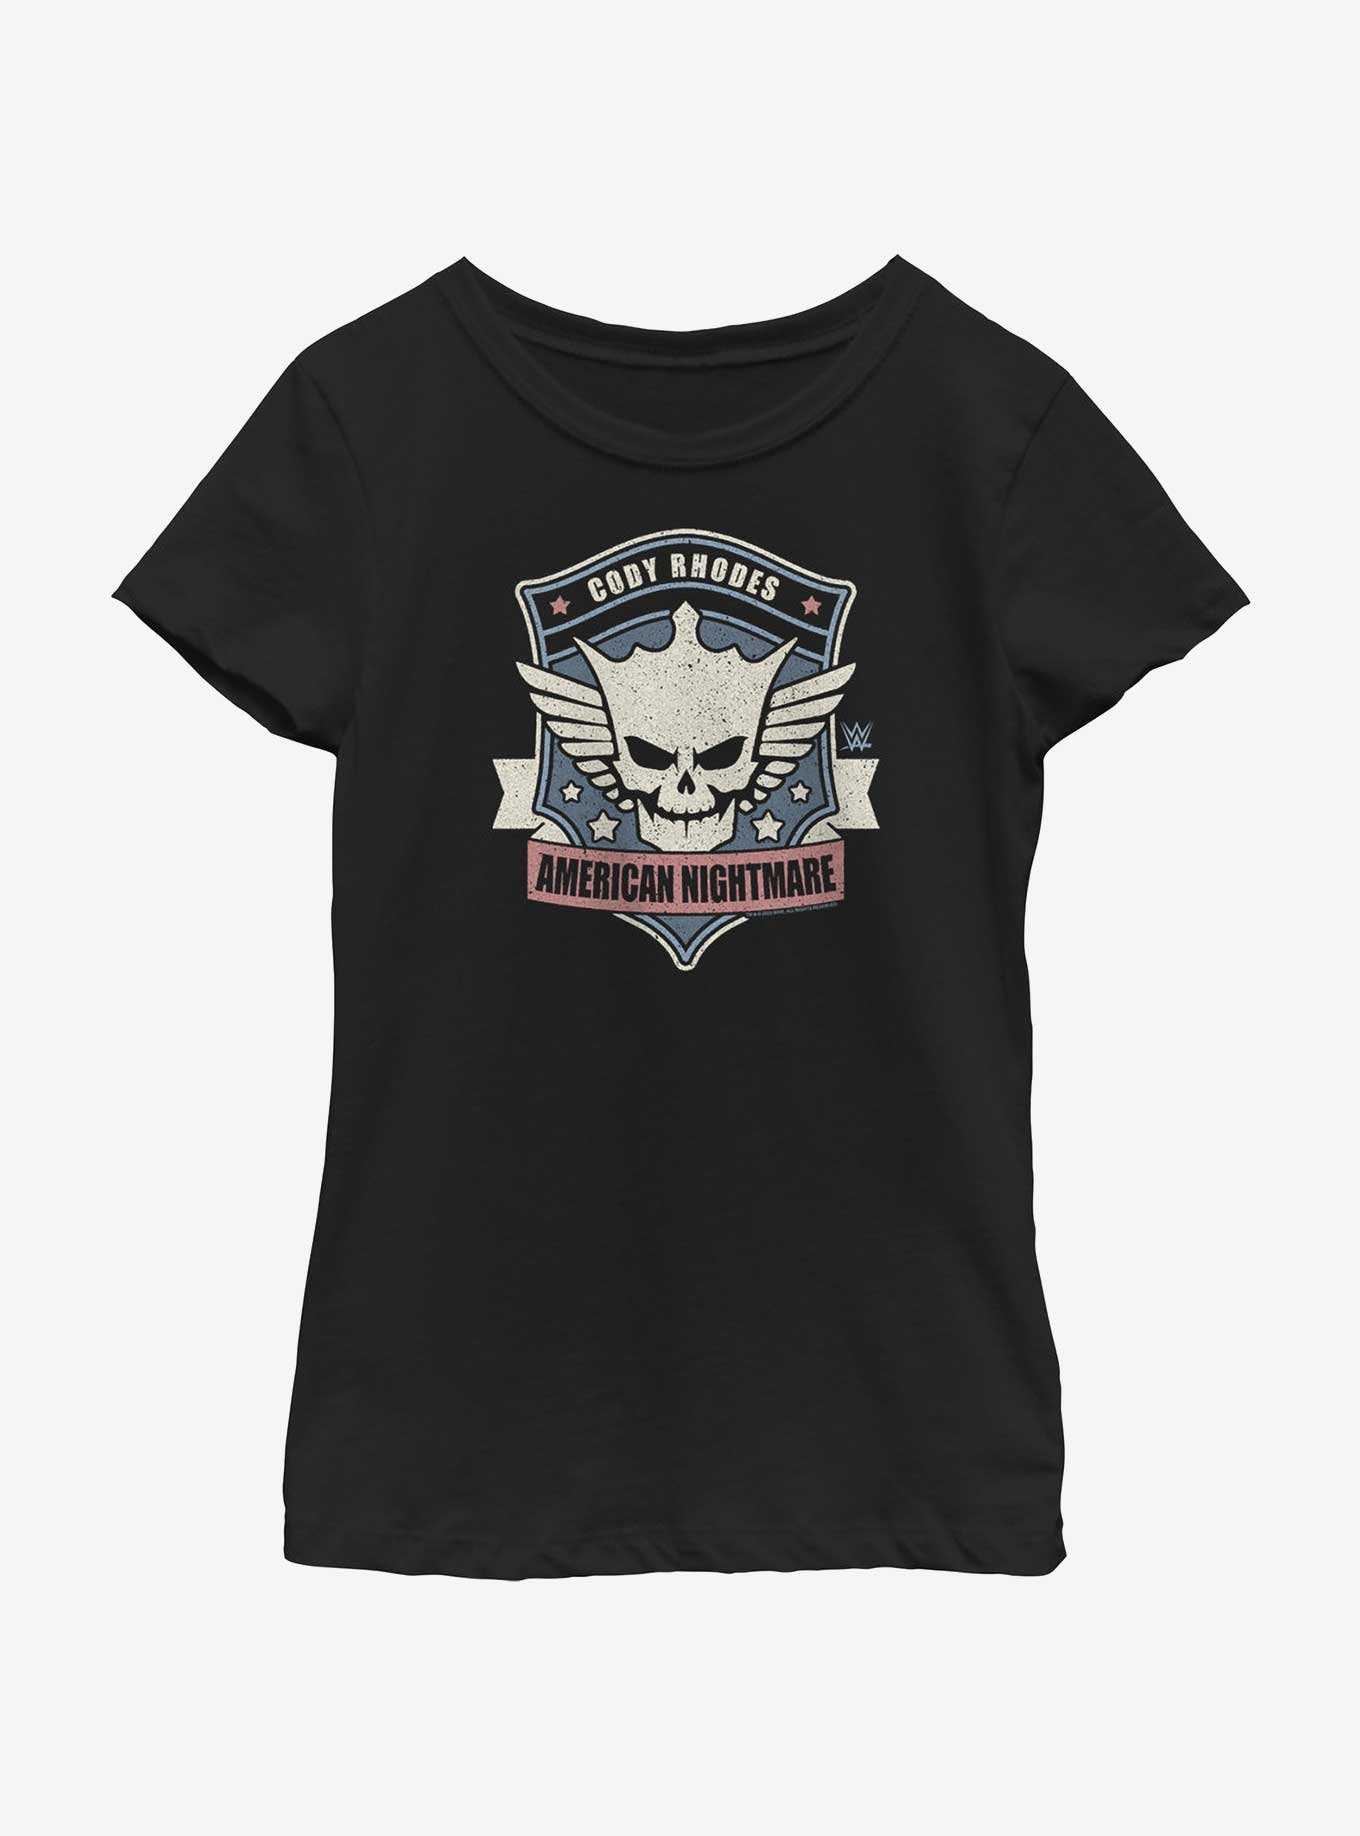 WWE American Nightmare Cody Rhodes Crest Youth Girls T-Shirt, , hi-res